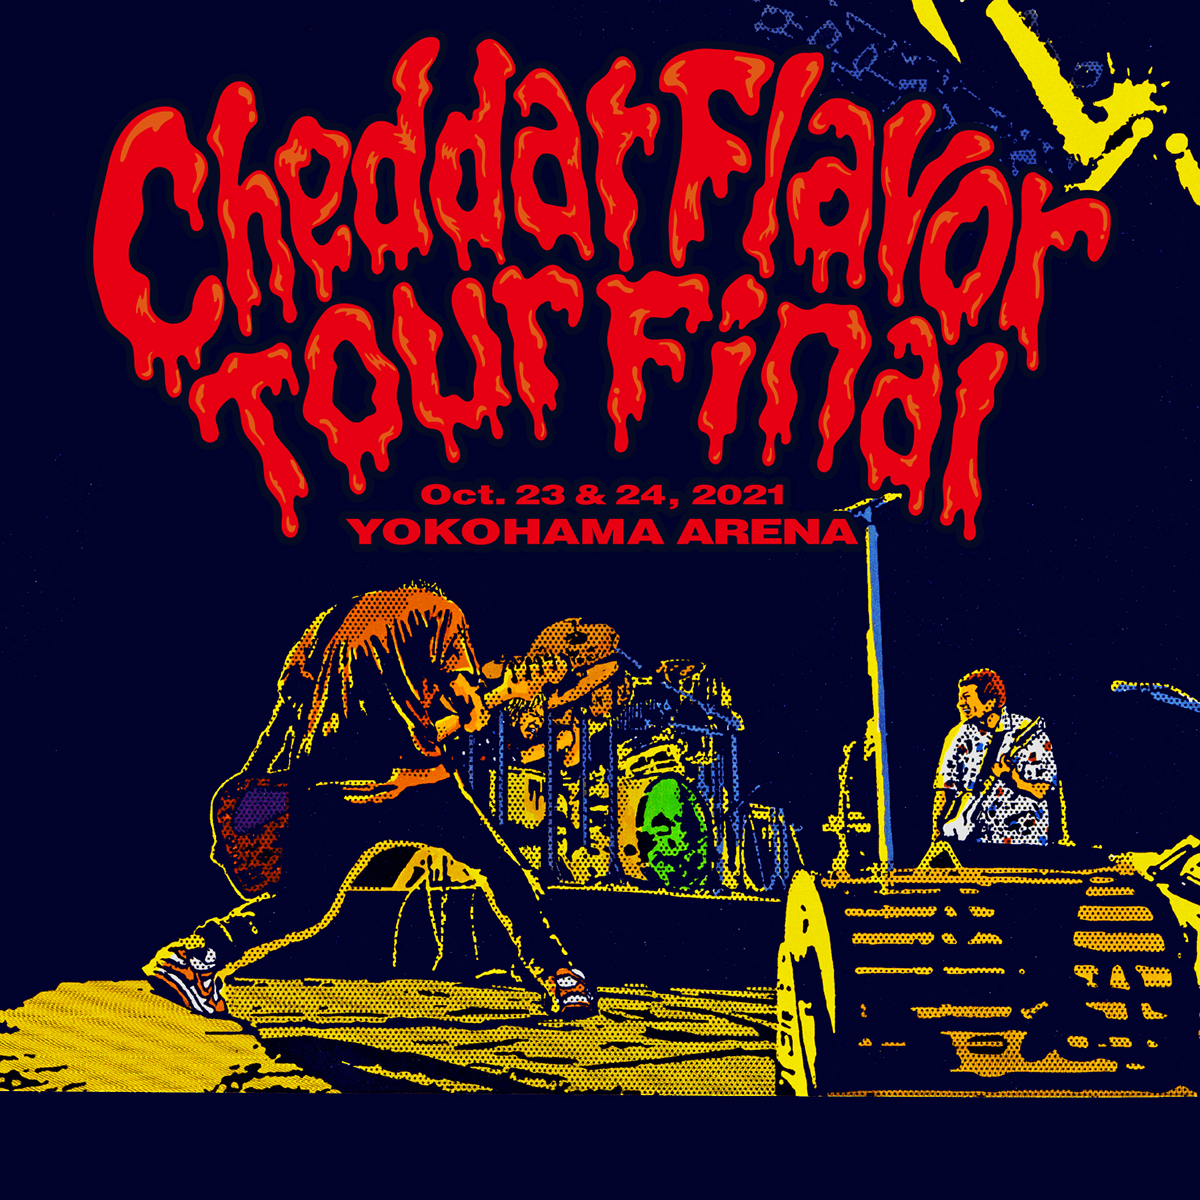 Cheddar flavor Tour Final